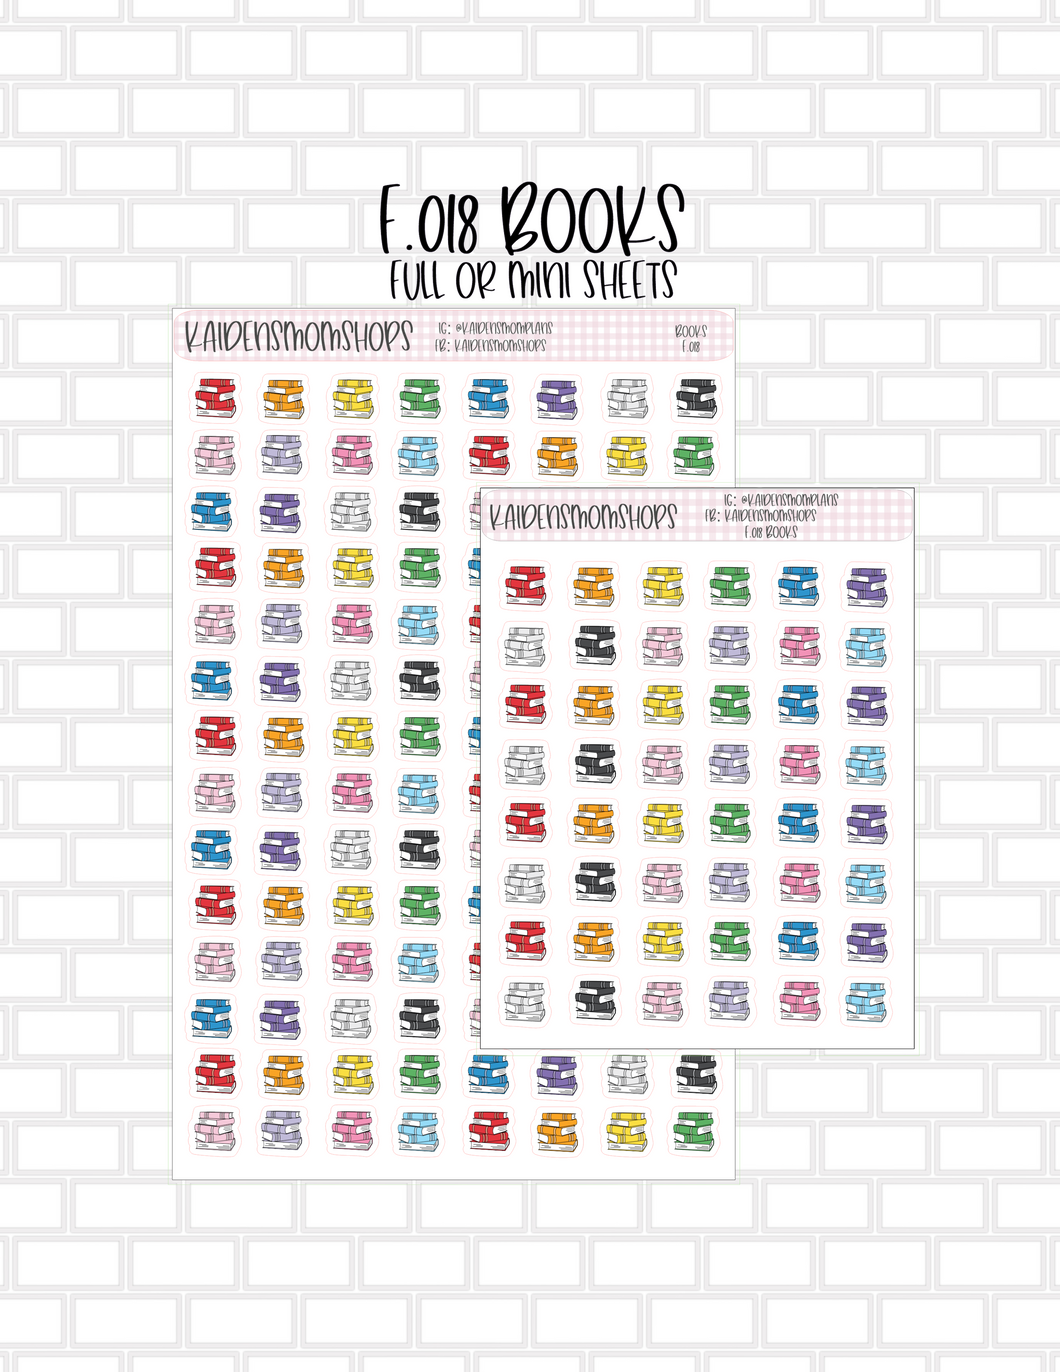 F.018 Books - Full or Mini Sheet